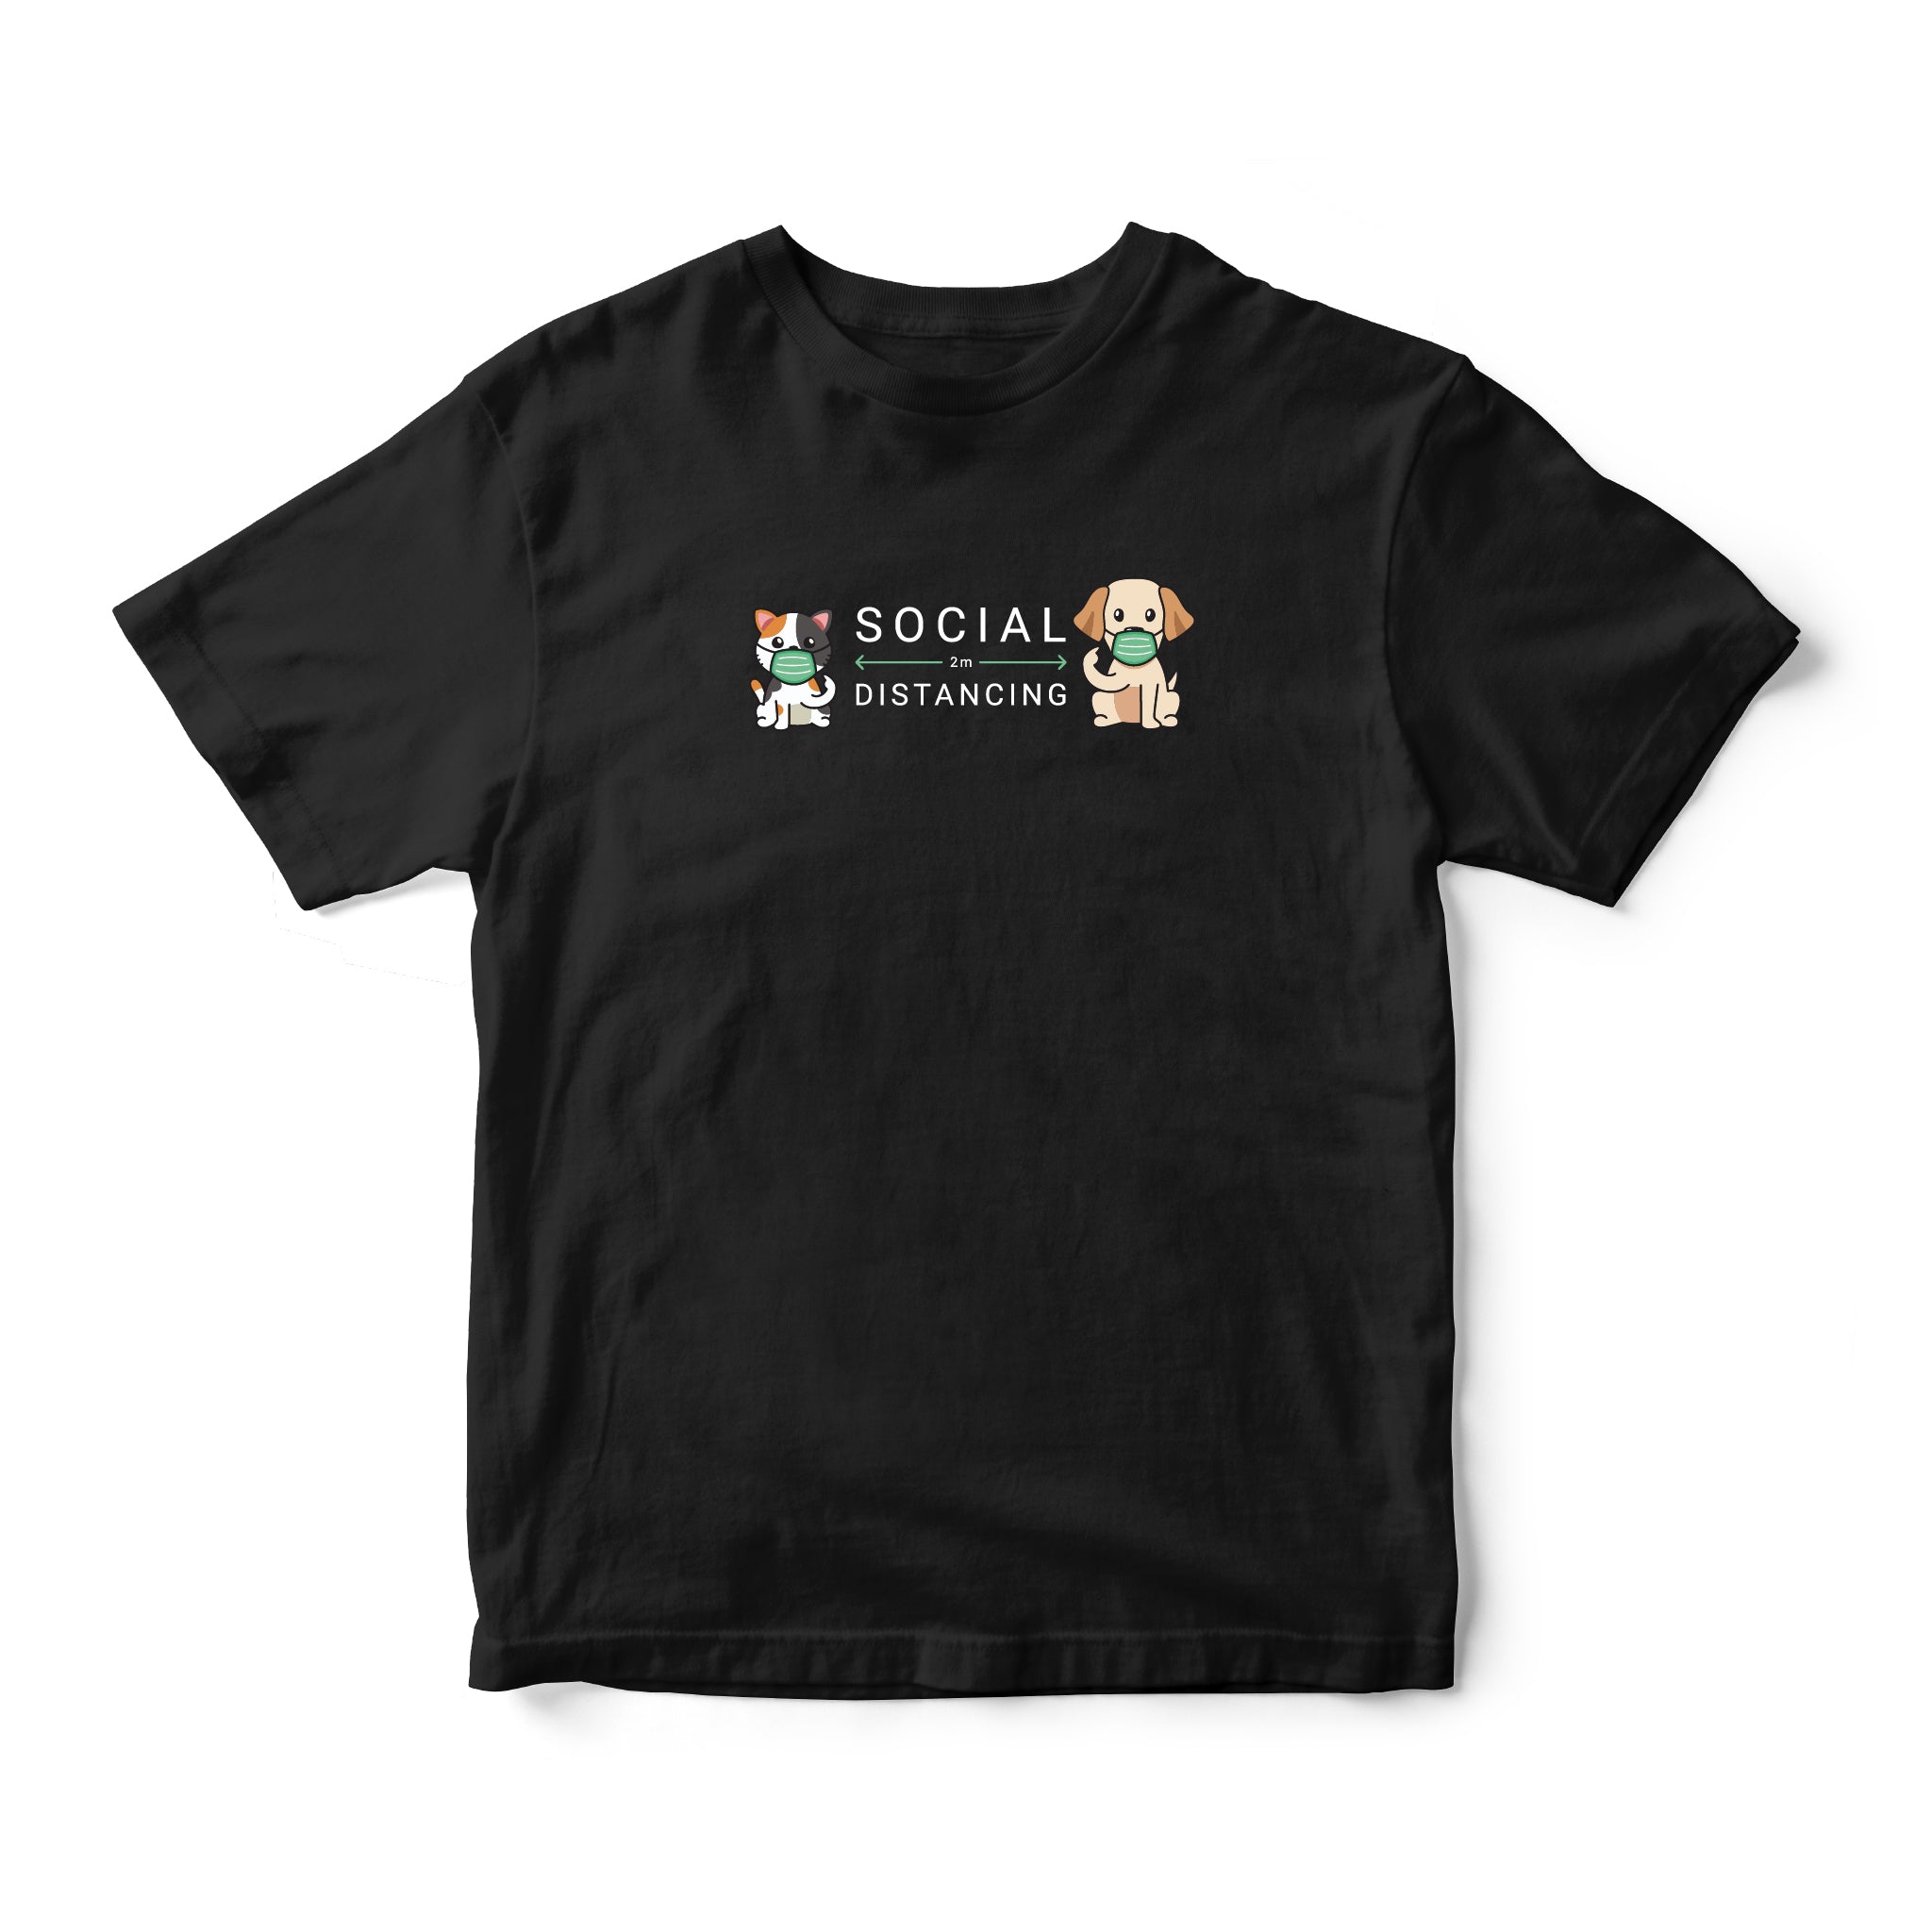 Instee Social Distancing T-shirt Unisex 100% Cotton